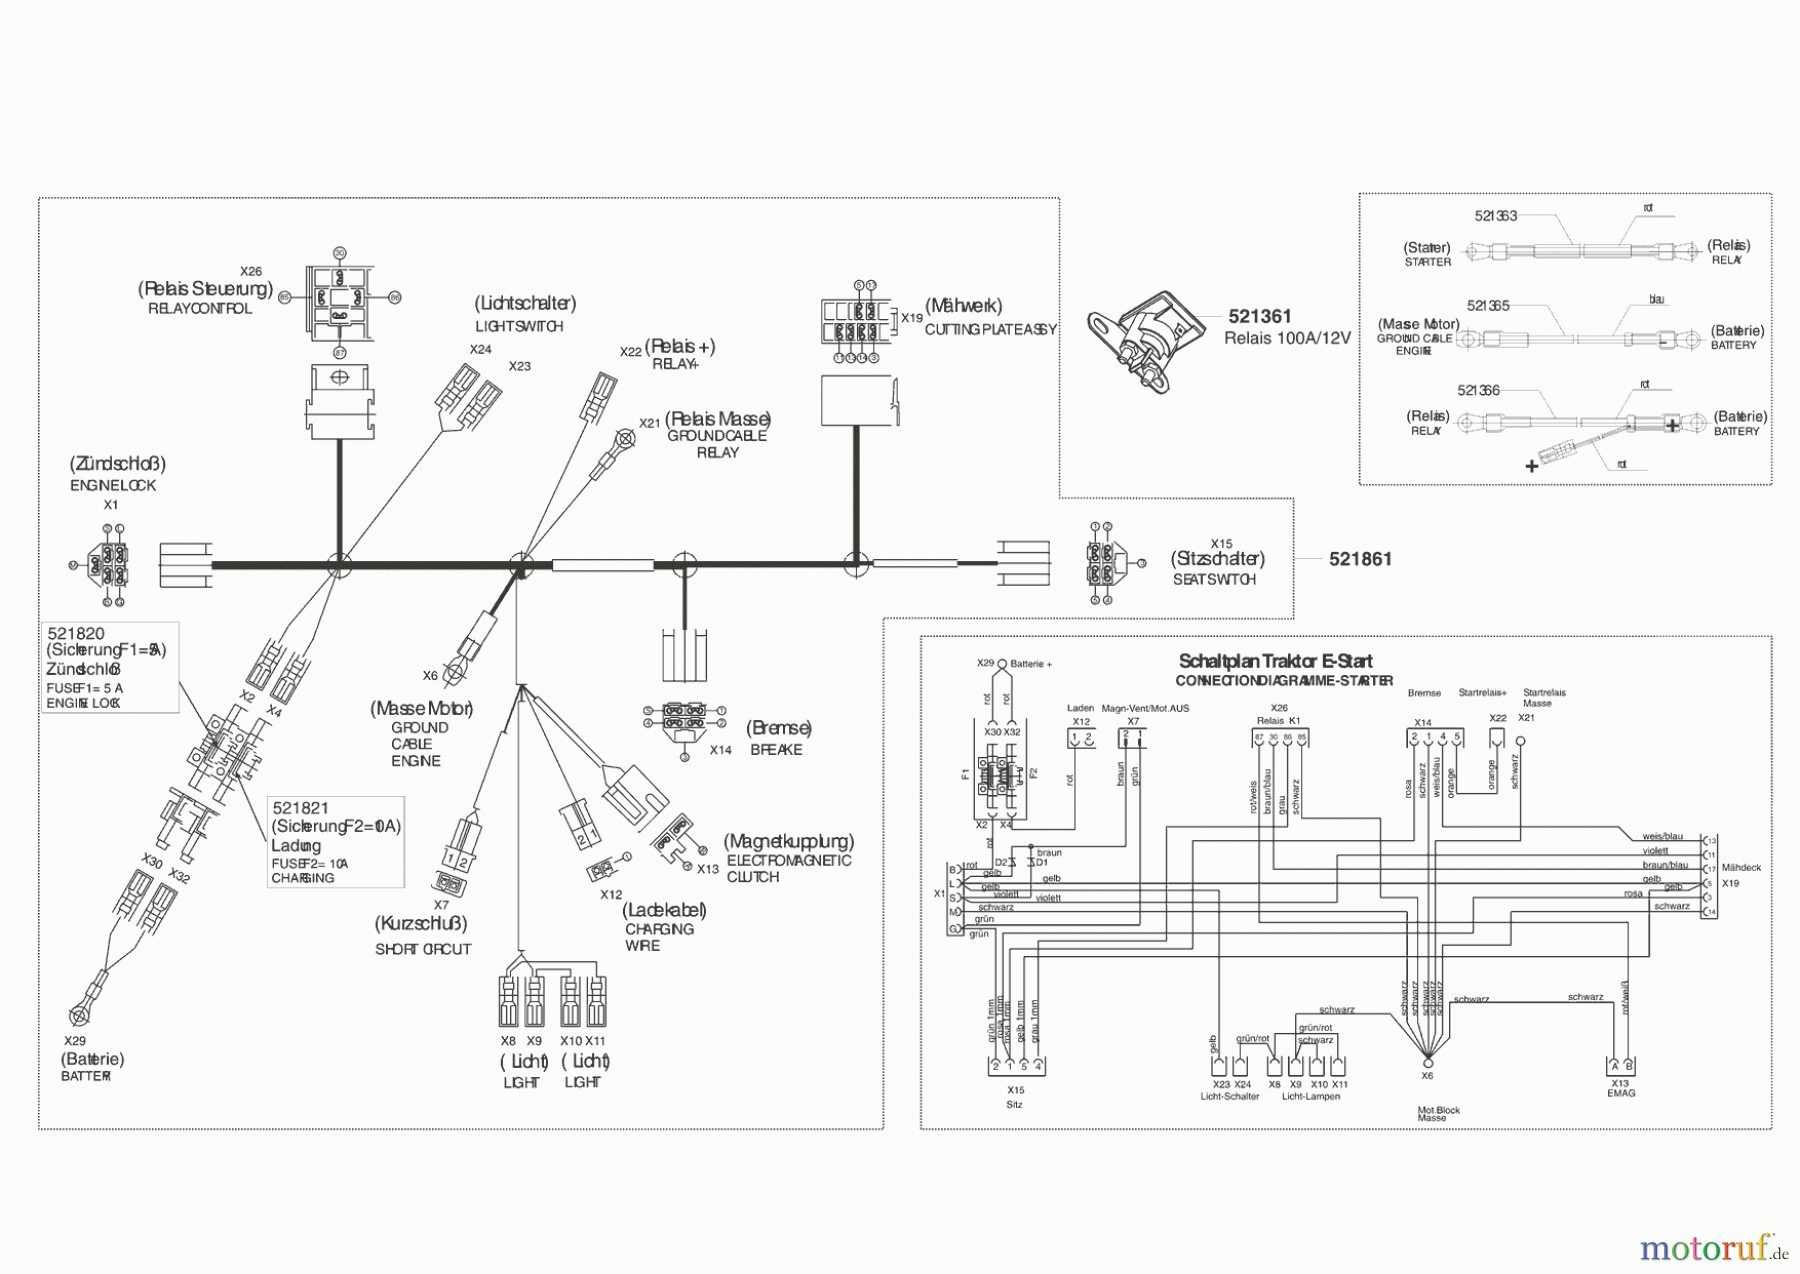  Powerline Gartentechnik Rasentraktor T 15-102 S 02/2003 - 10/2003 Seite 7